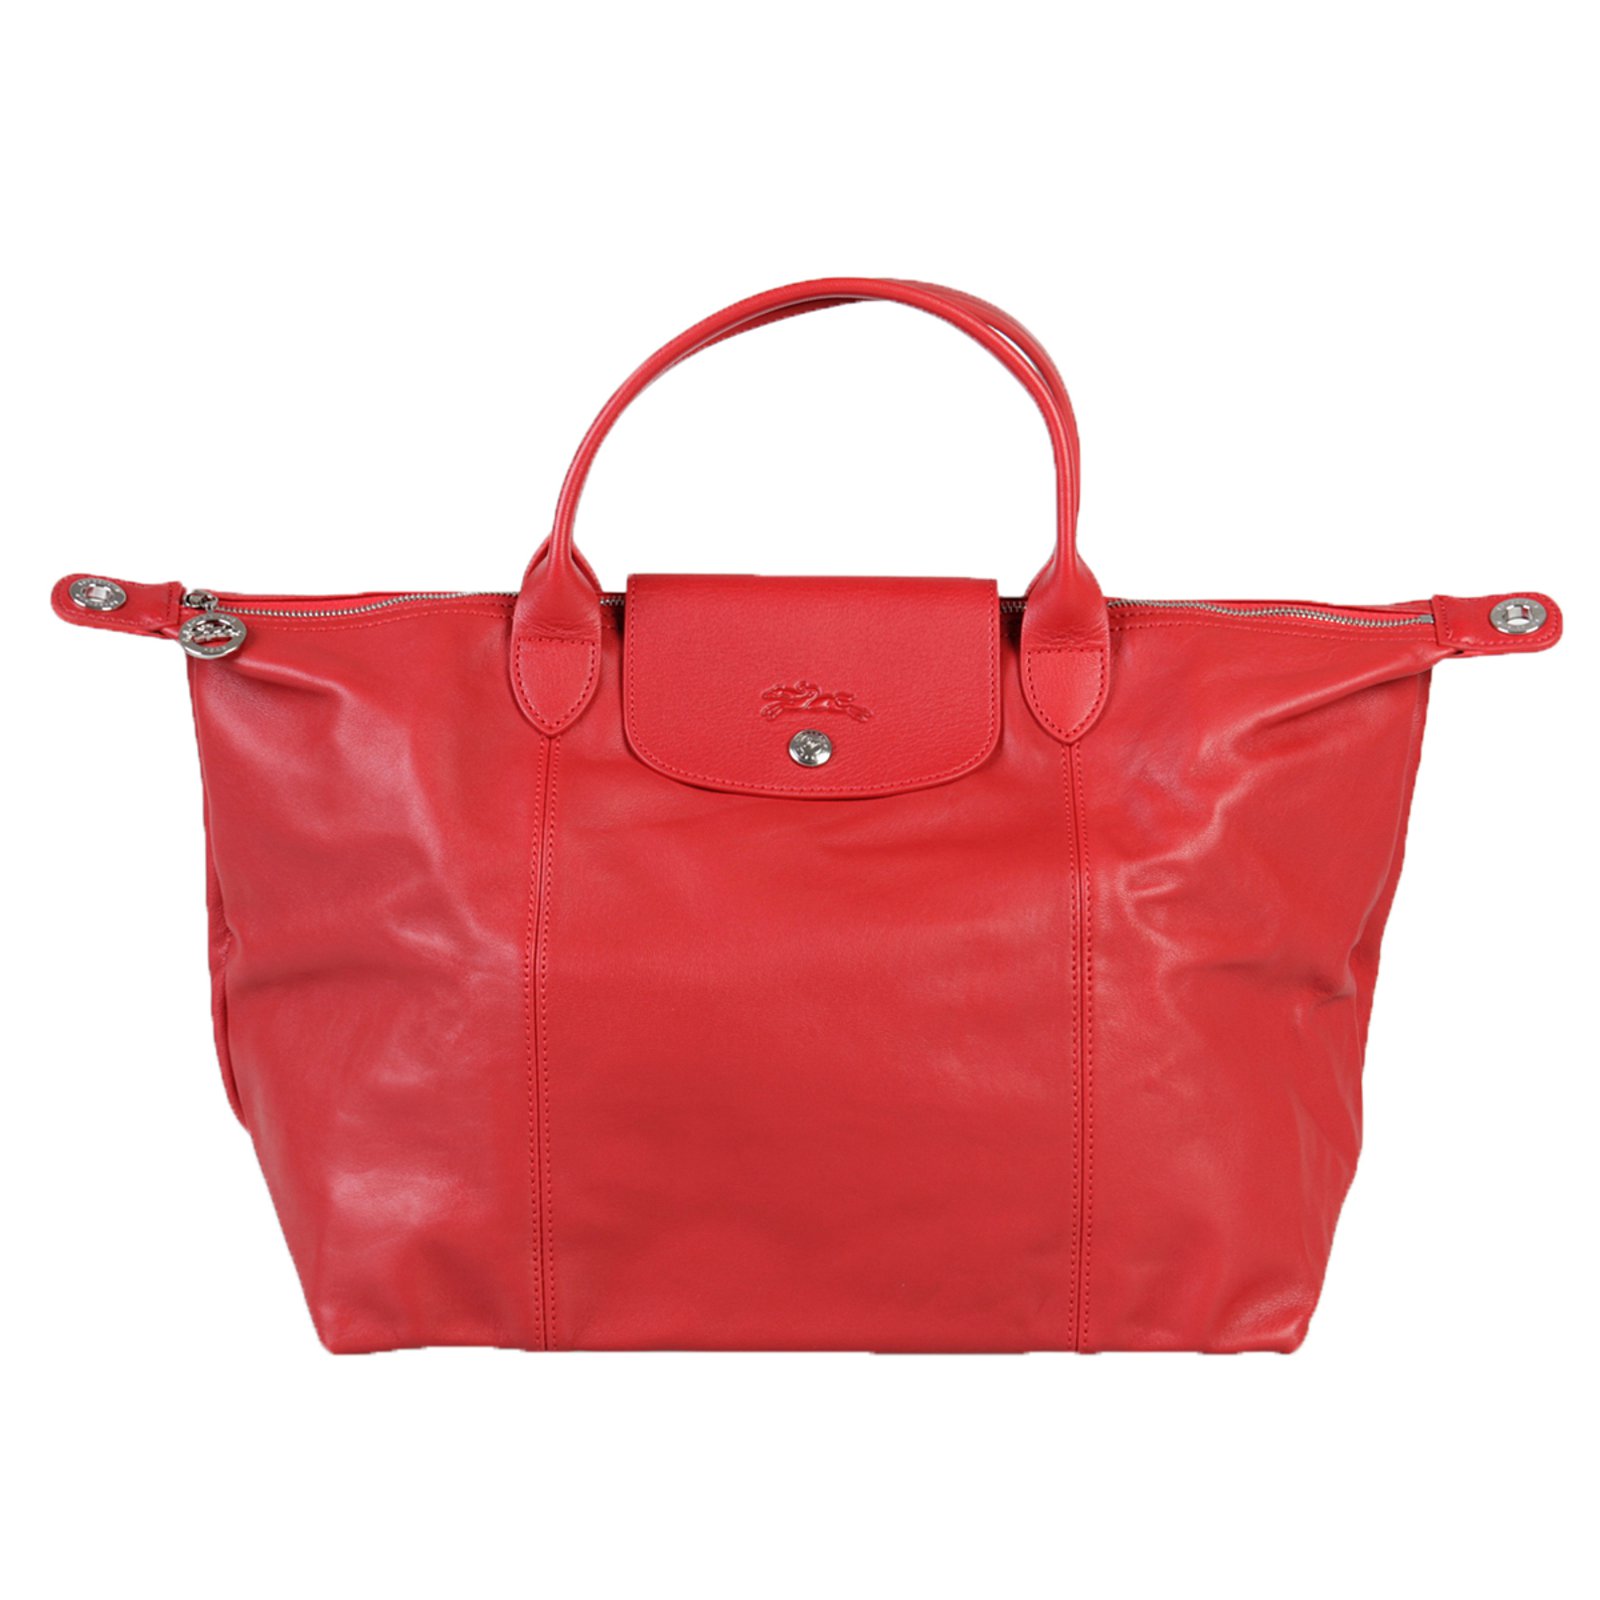 Longchamp Long champ leather handbag 